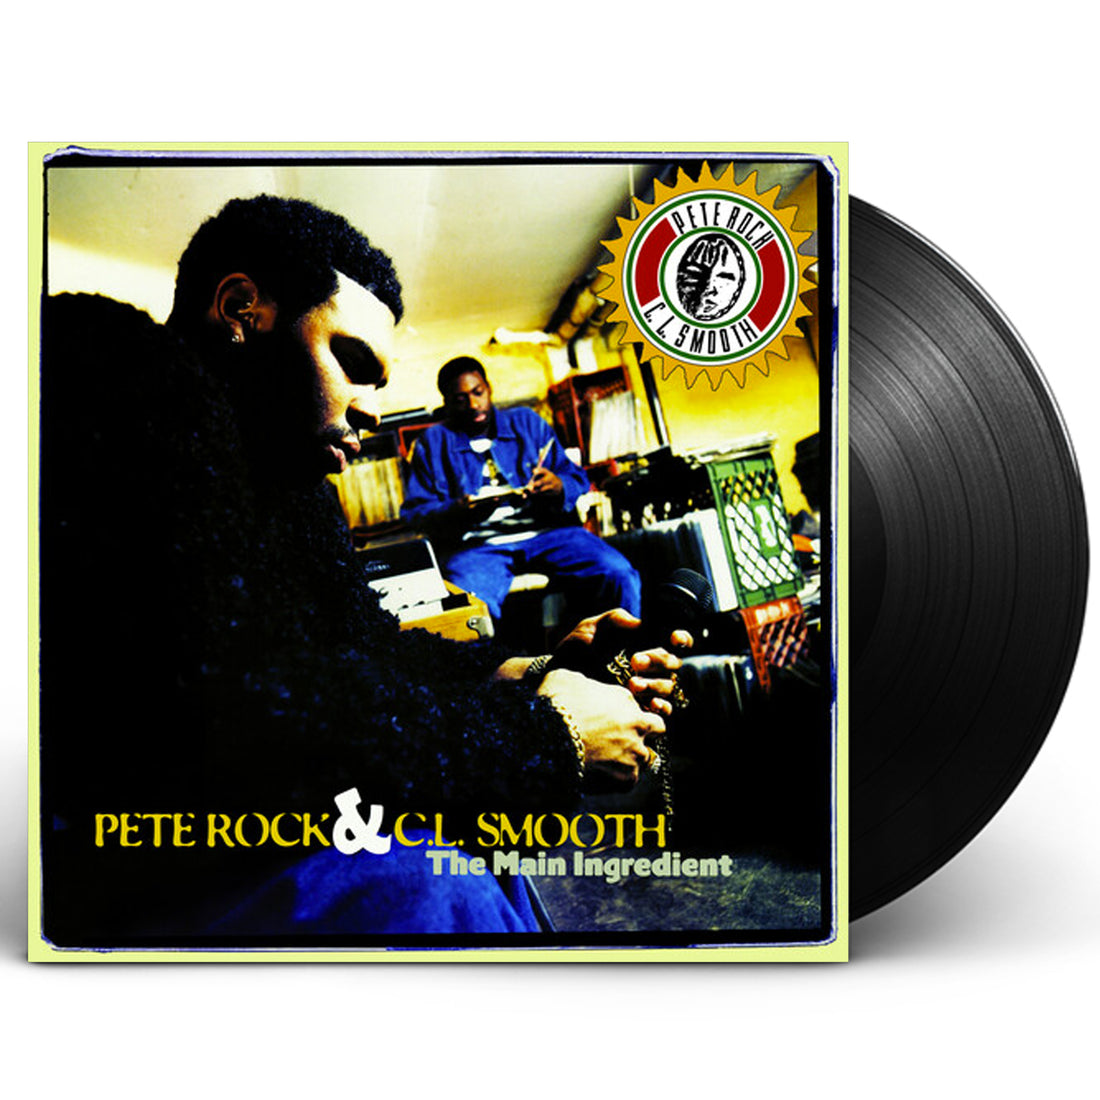 Pete Rock & CL Smooth "The Main Ingredient" 2xLP Vinyl